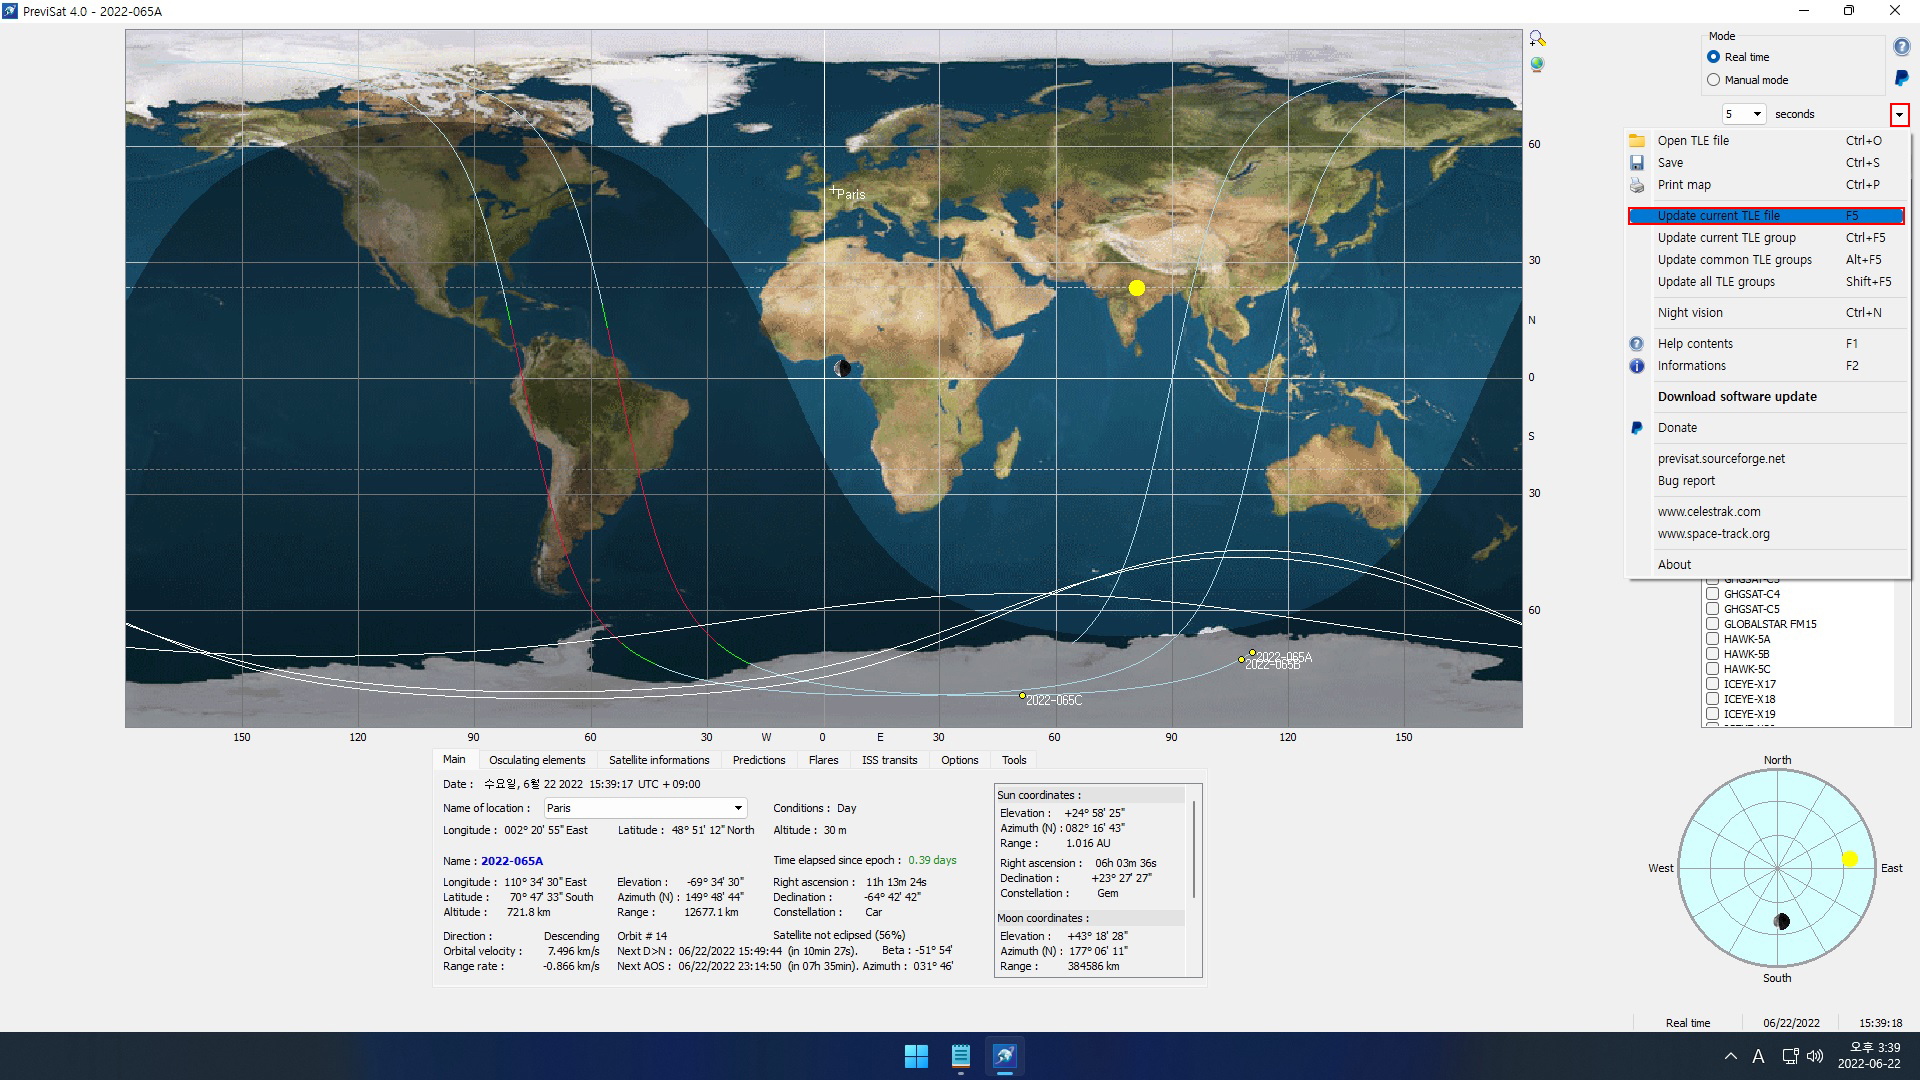 PreviSat 4.0.8.1 성능검증위성 실시간 위치 확인